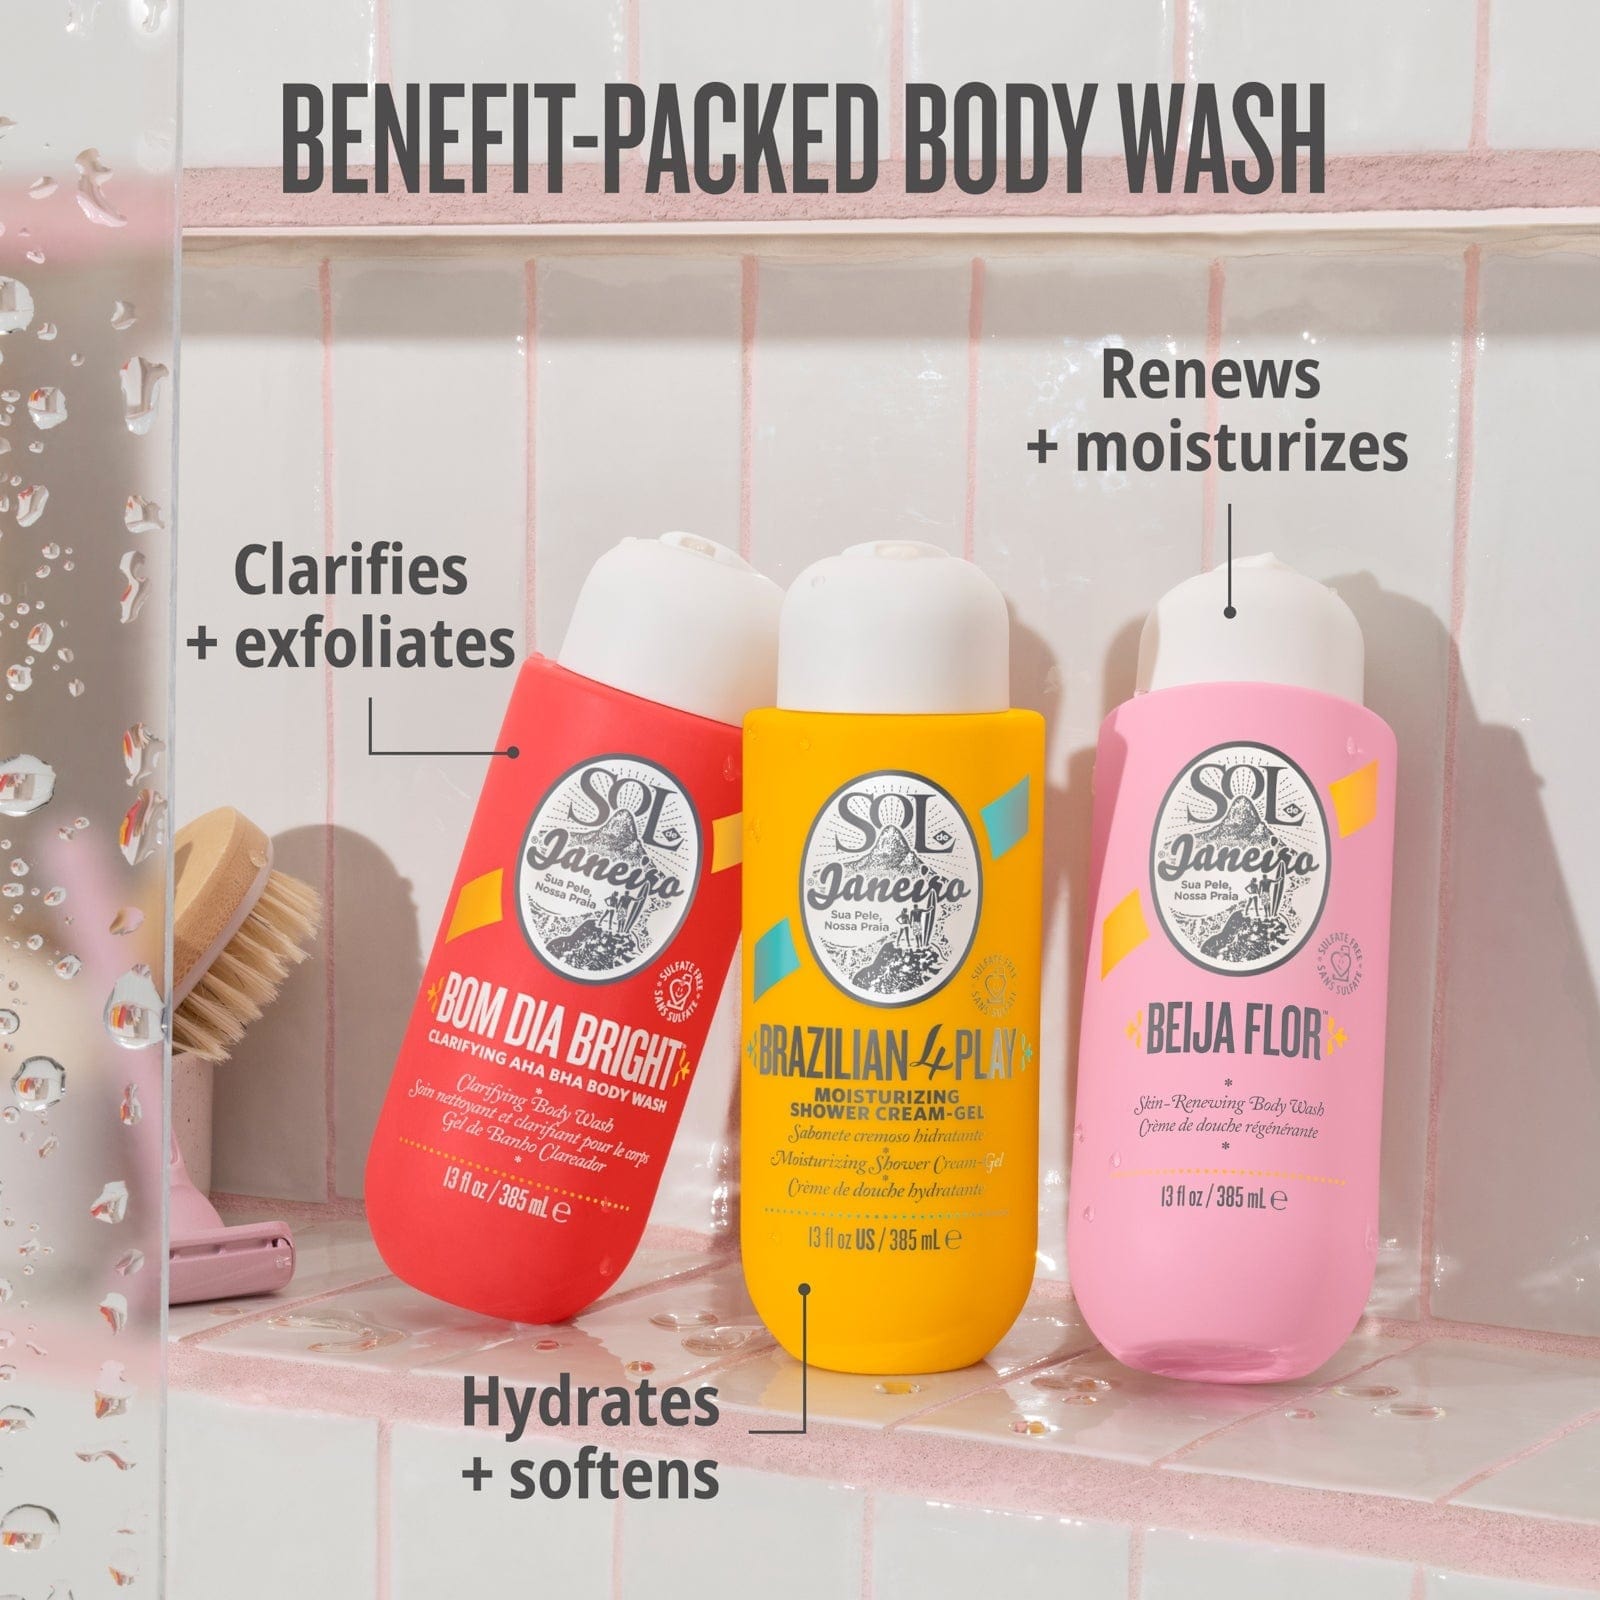 Benefit-packed body wash - clarifies + exfoliates, hydrates + softens, renews + moisturizes